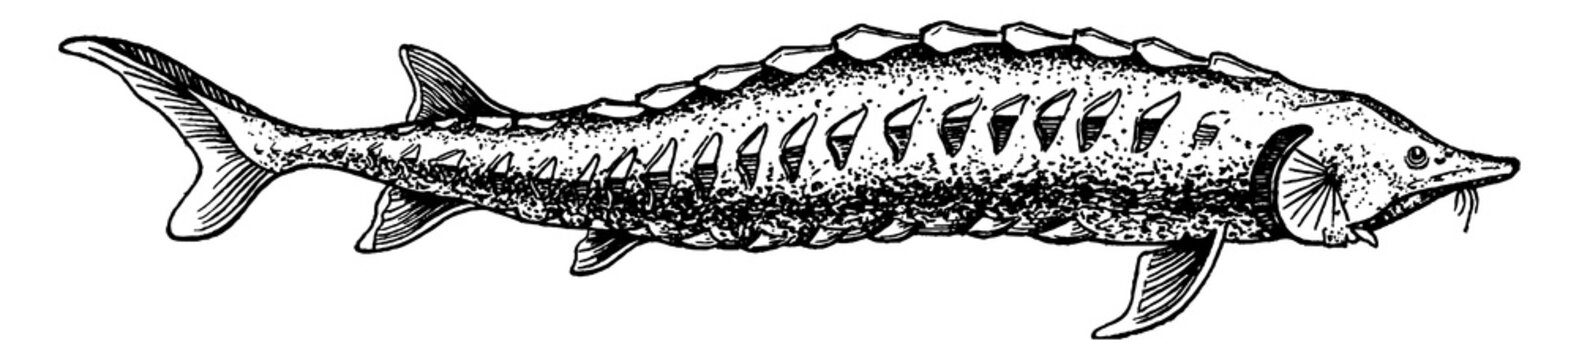 Sturgeon (Acipenser sturio), vintage illustration.